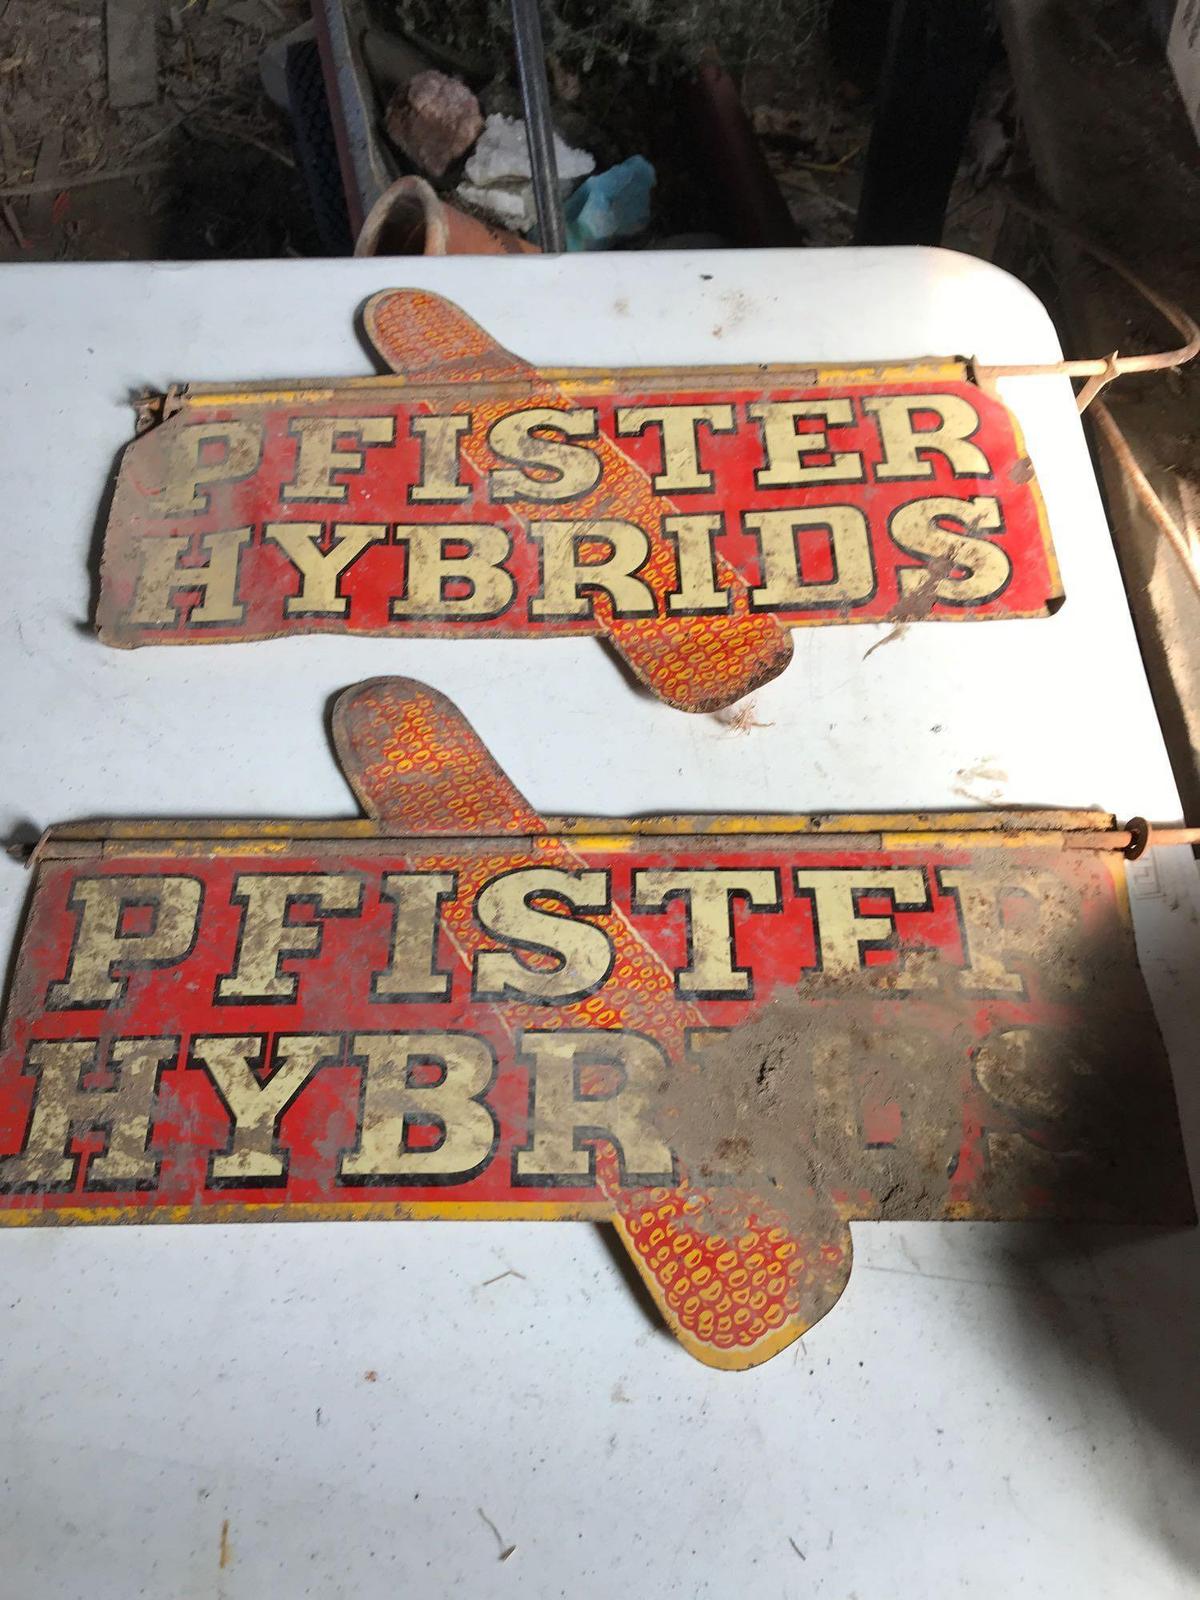 2 - 6" x 18" Pfister Hybrids metal corn sign.